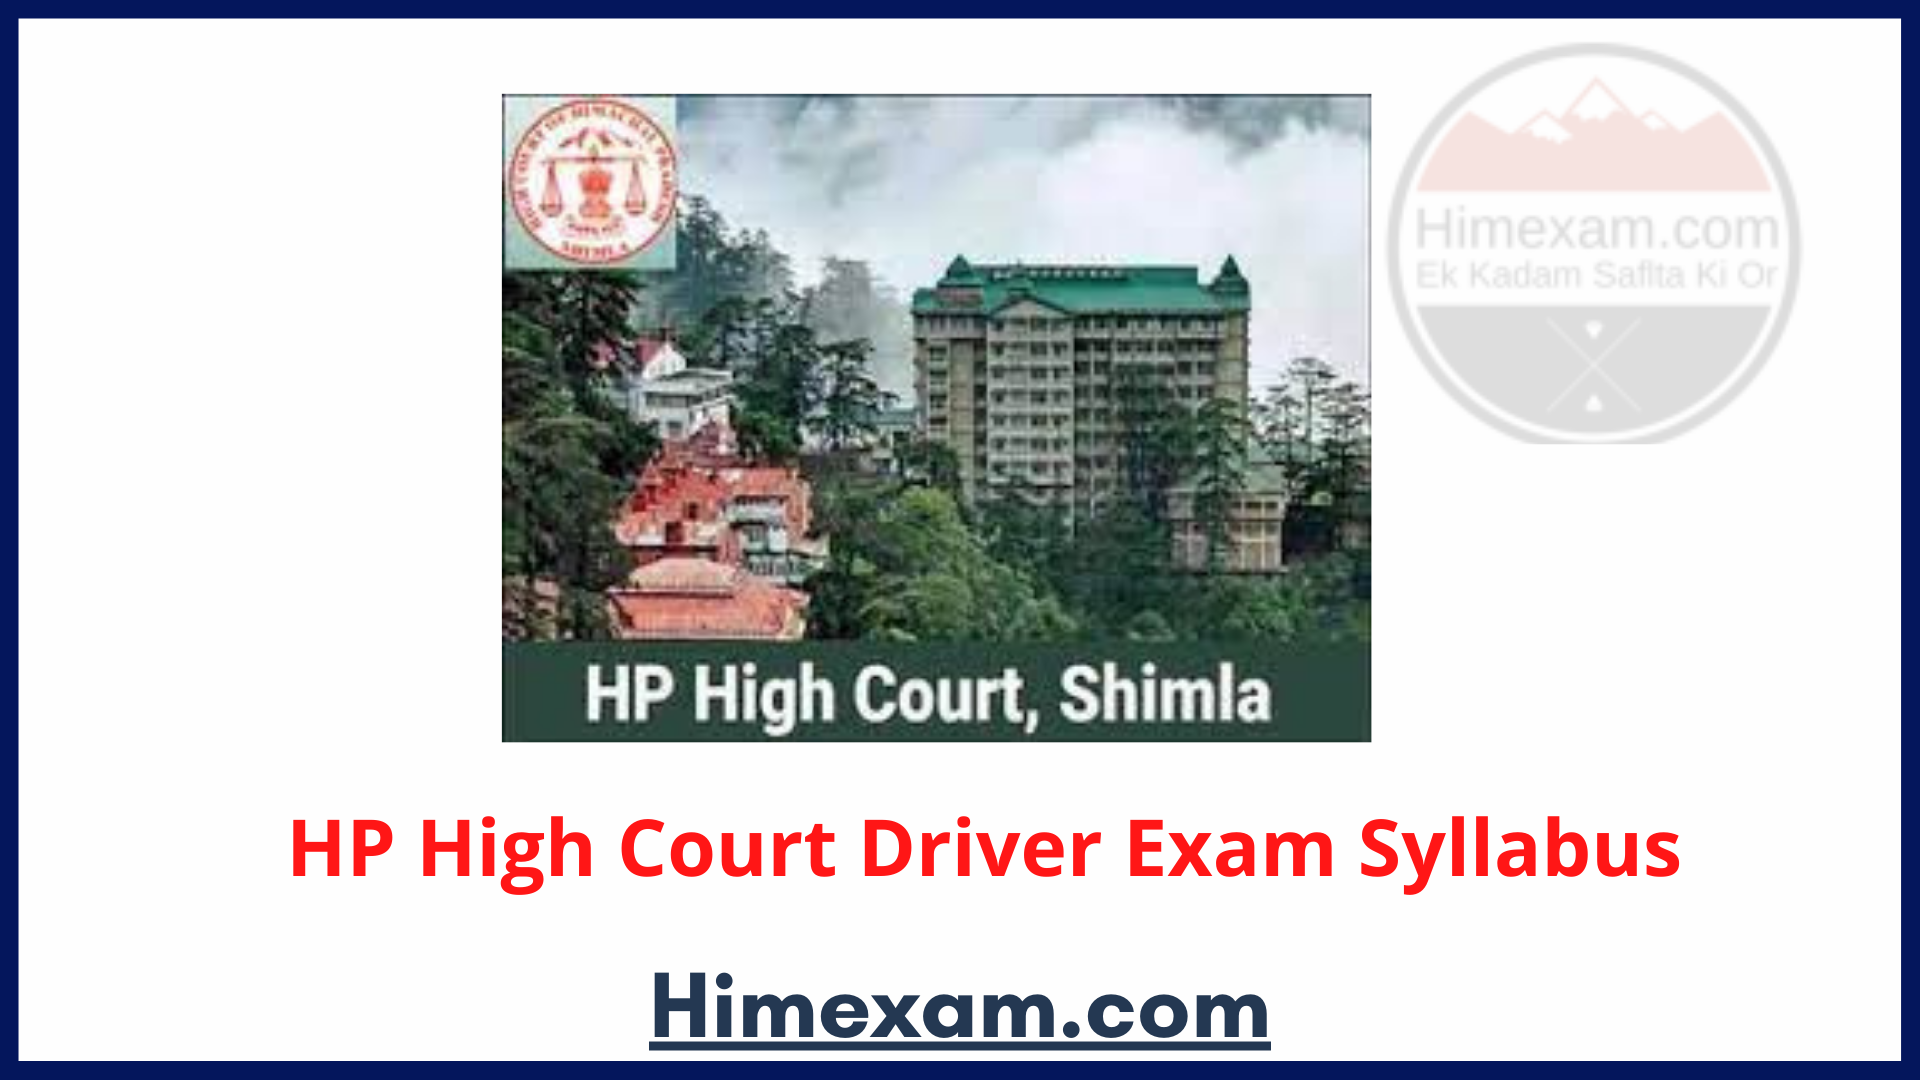 HP High Court Driver Exam Syllabus